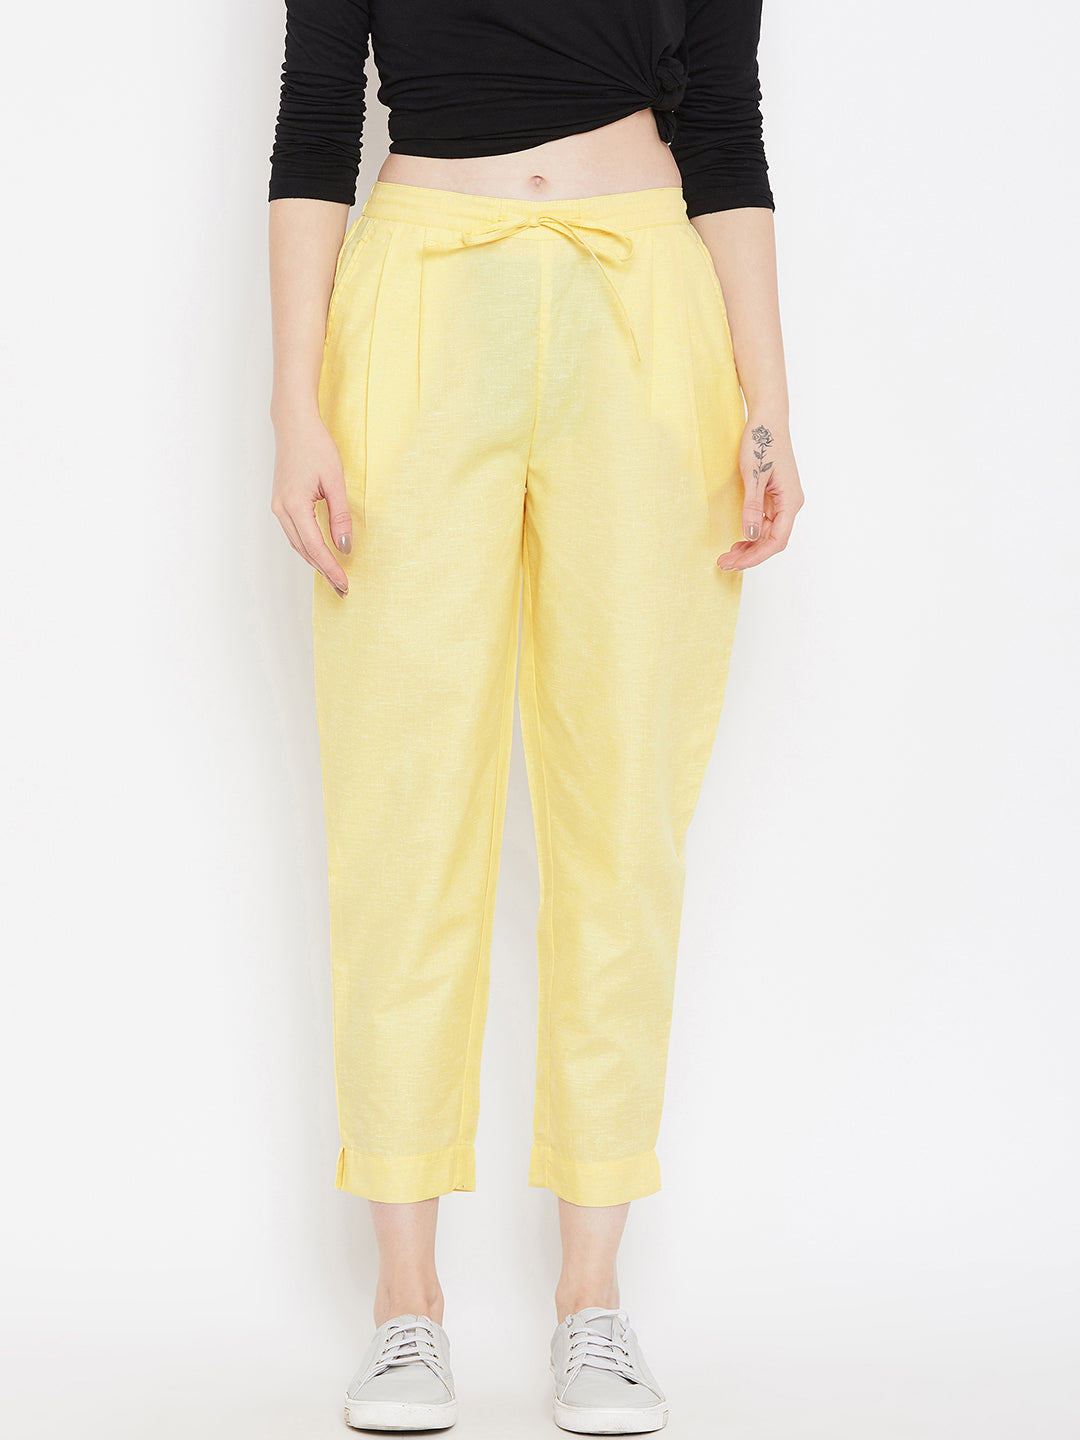 Straight Yellow Trouser(Sku-BLMD1913).